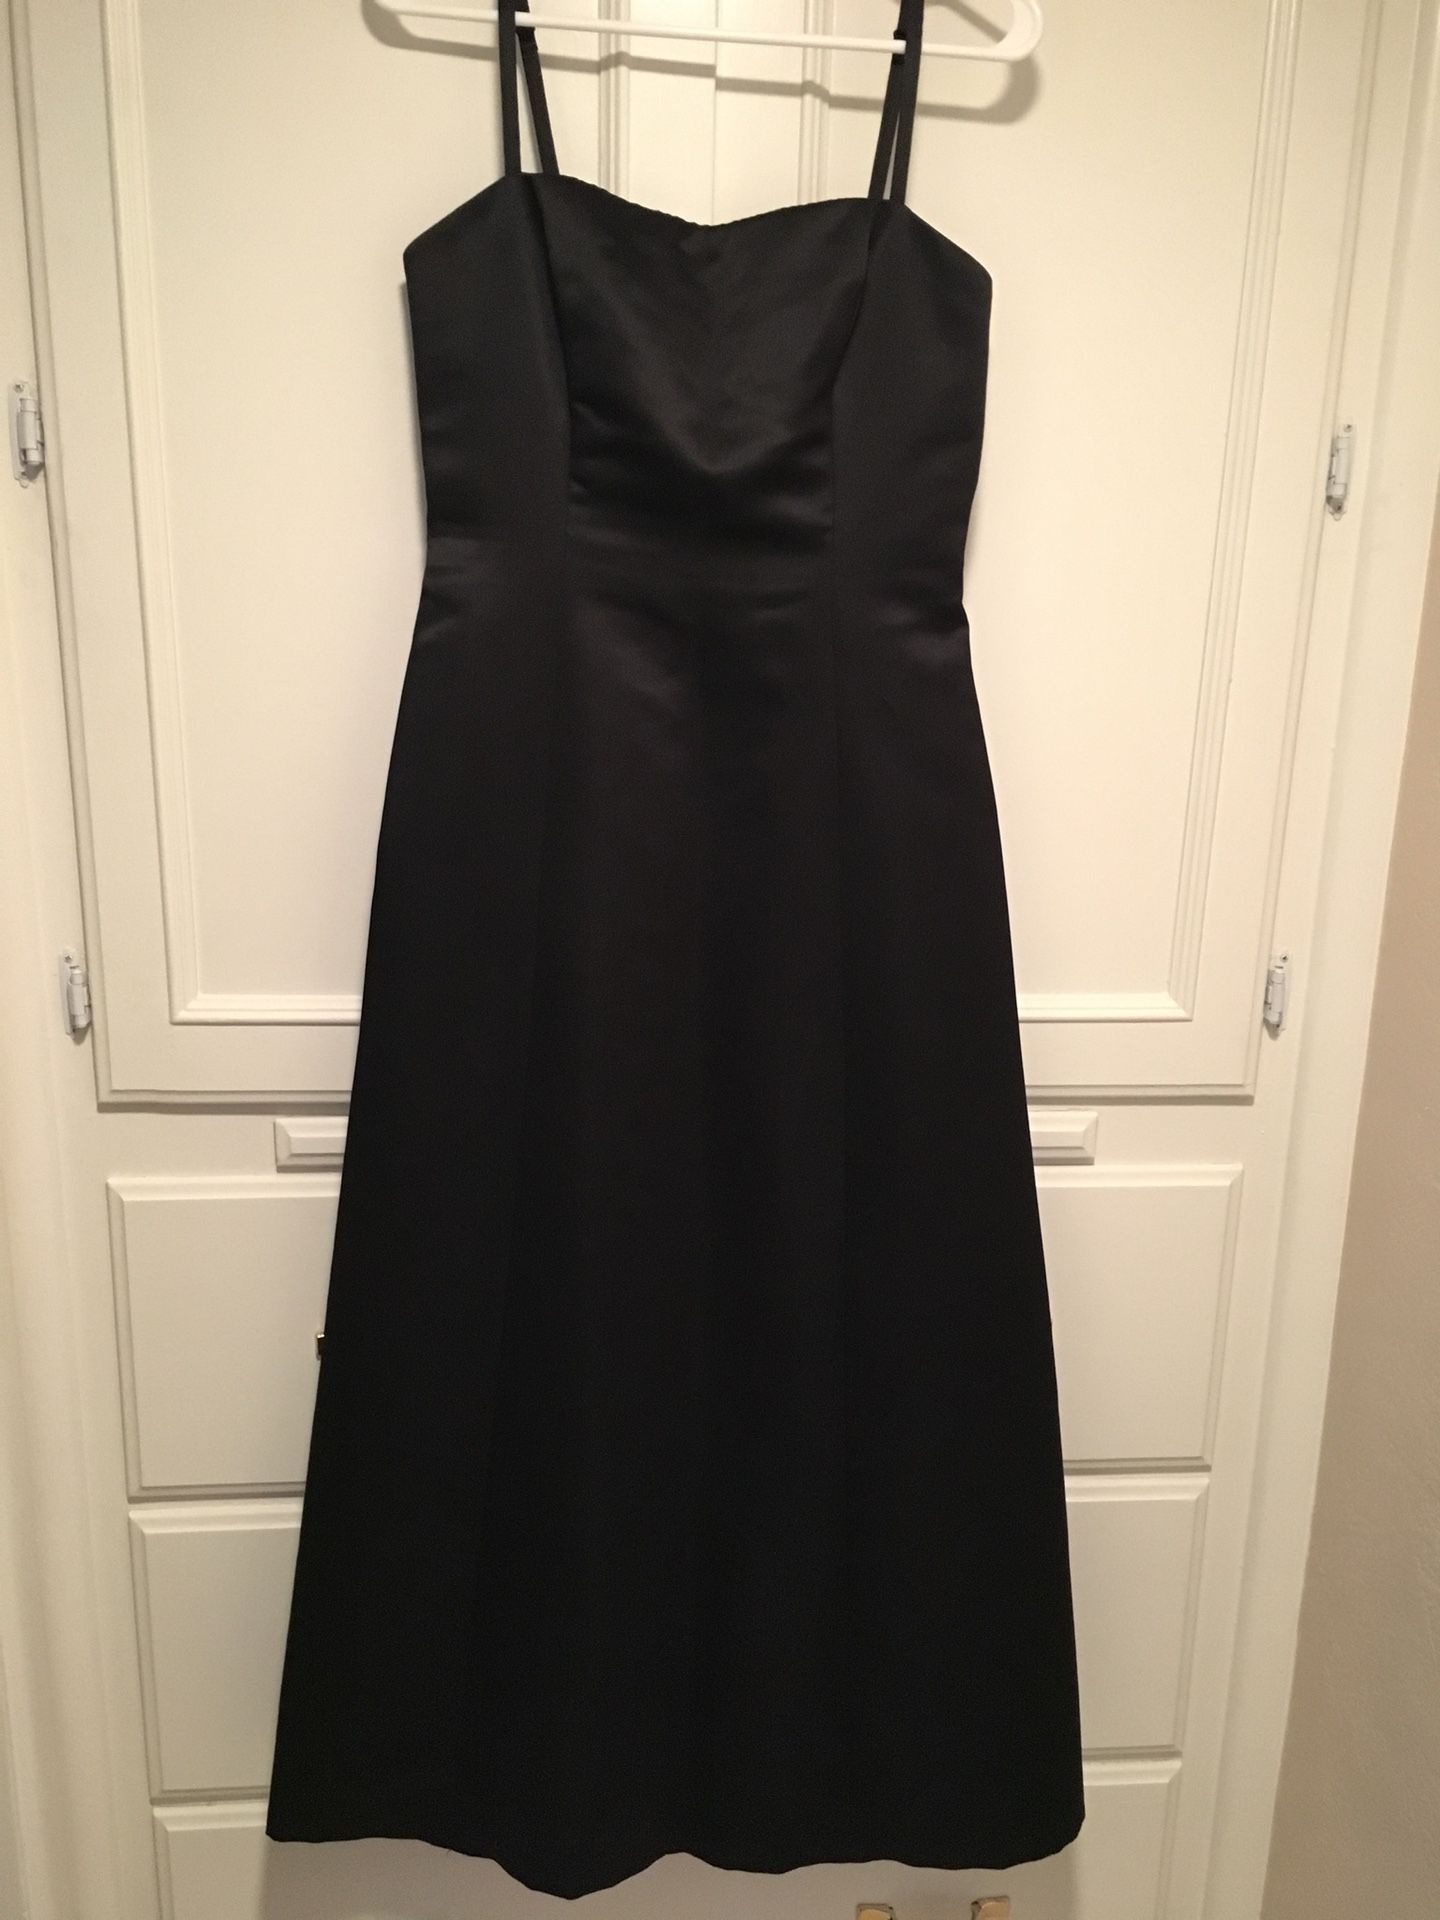 Teenager/woman’s black satin classic , elegant dress size 8